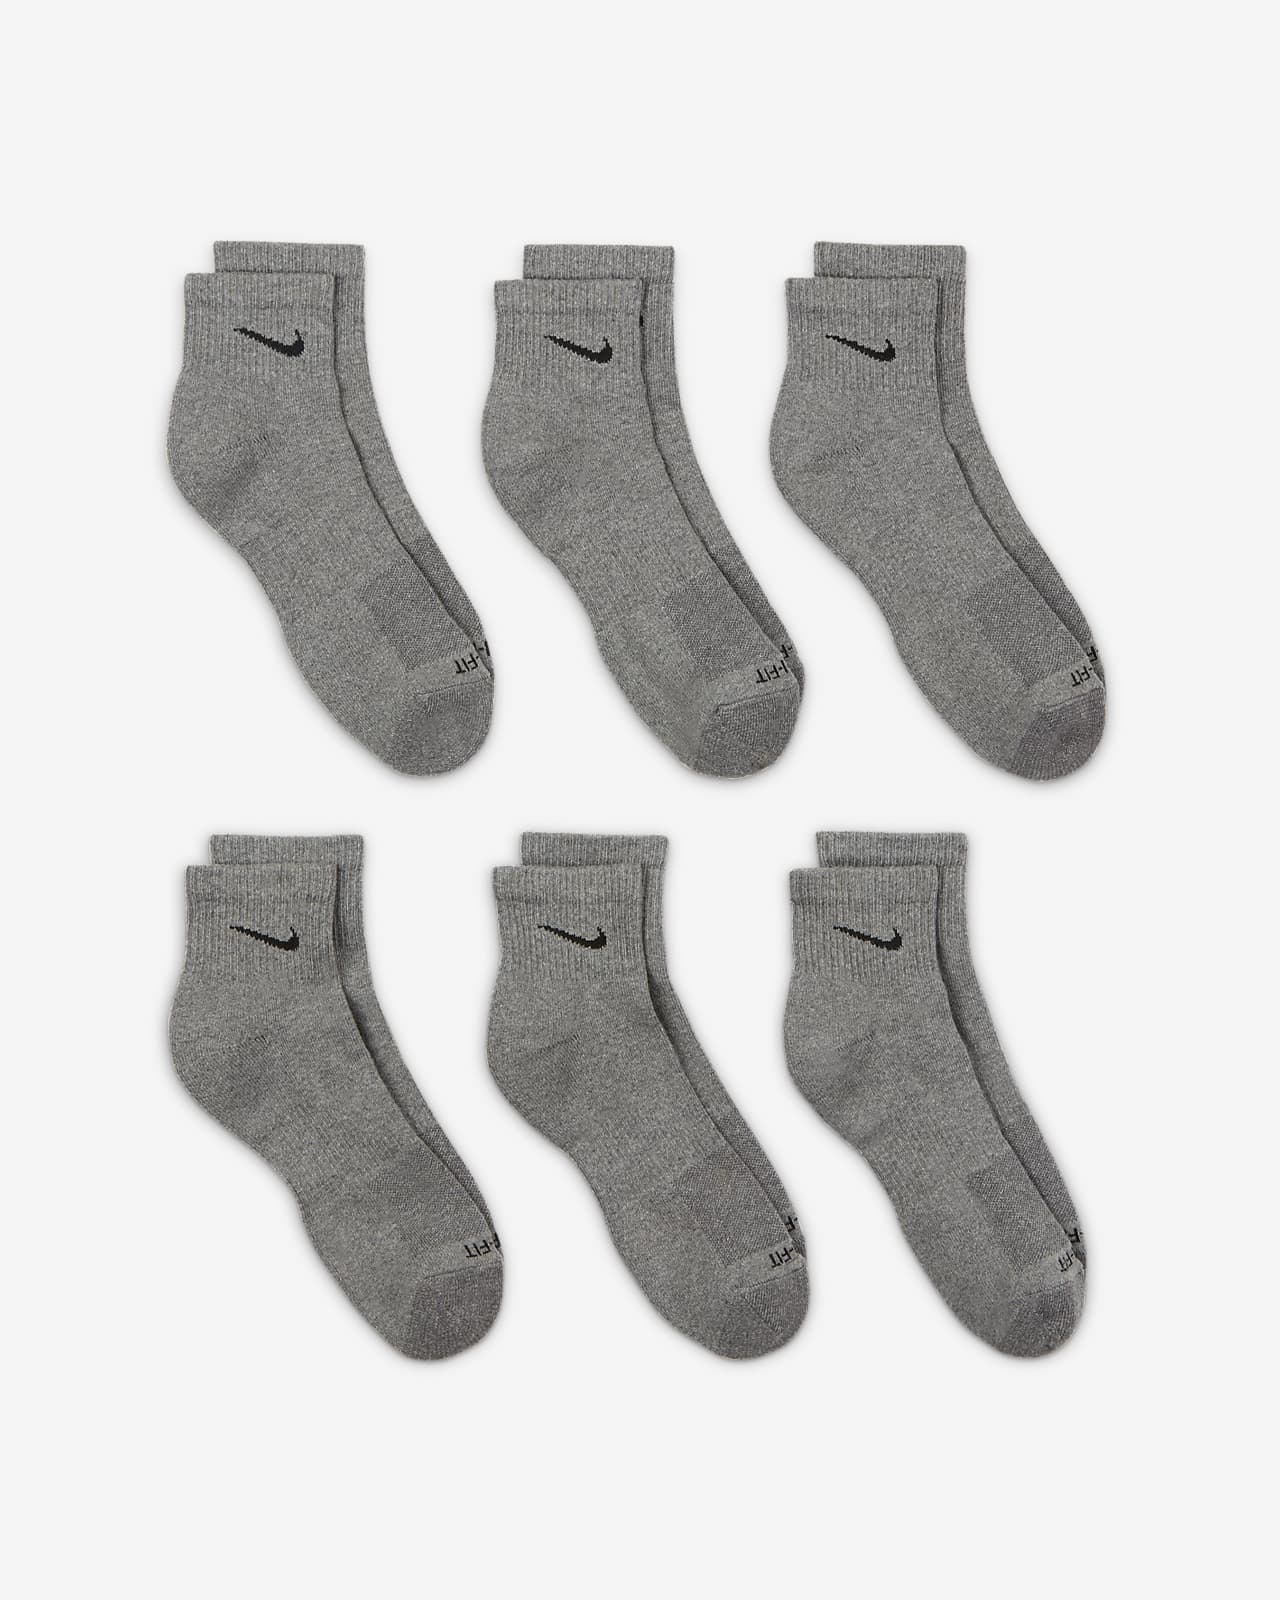 Nike Everyday Plus Athletic Low Socks, Breathable, 6-Pack